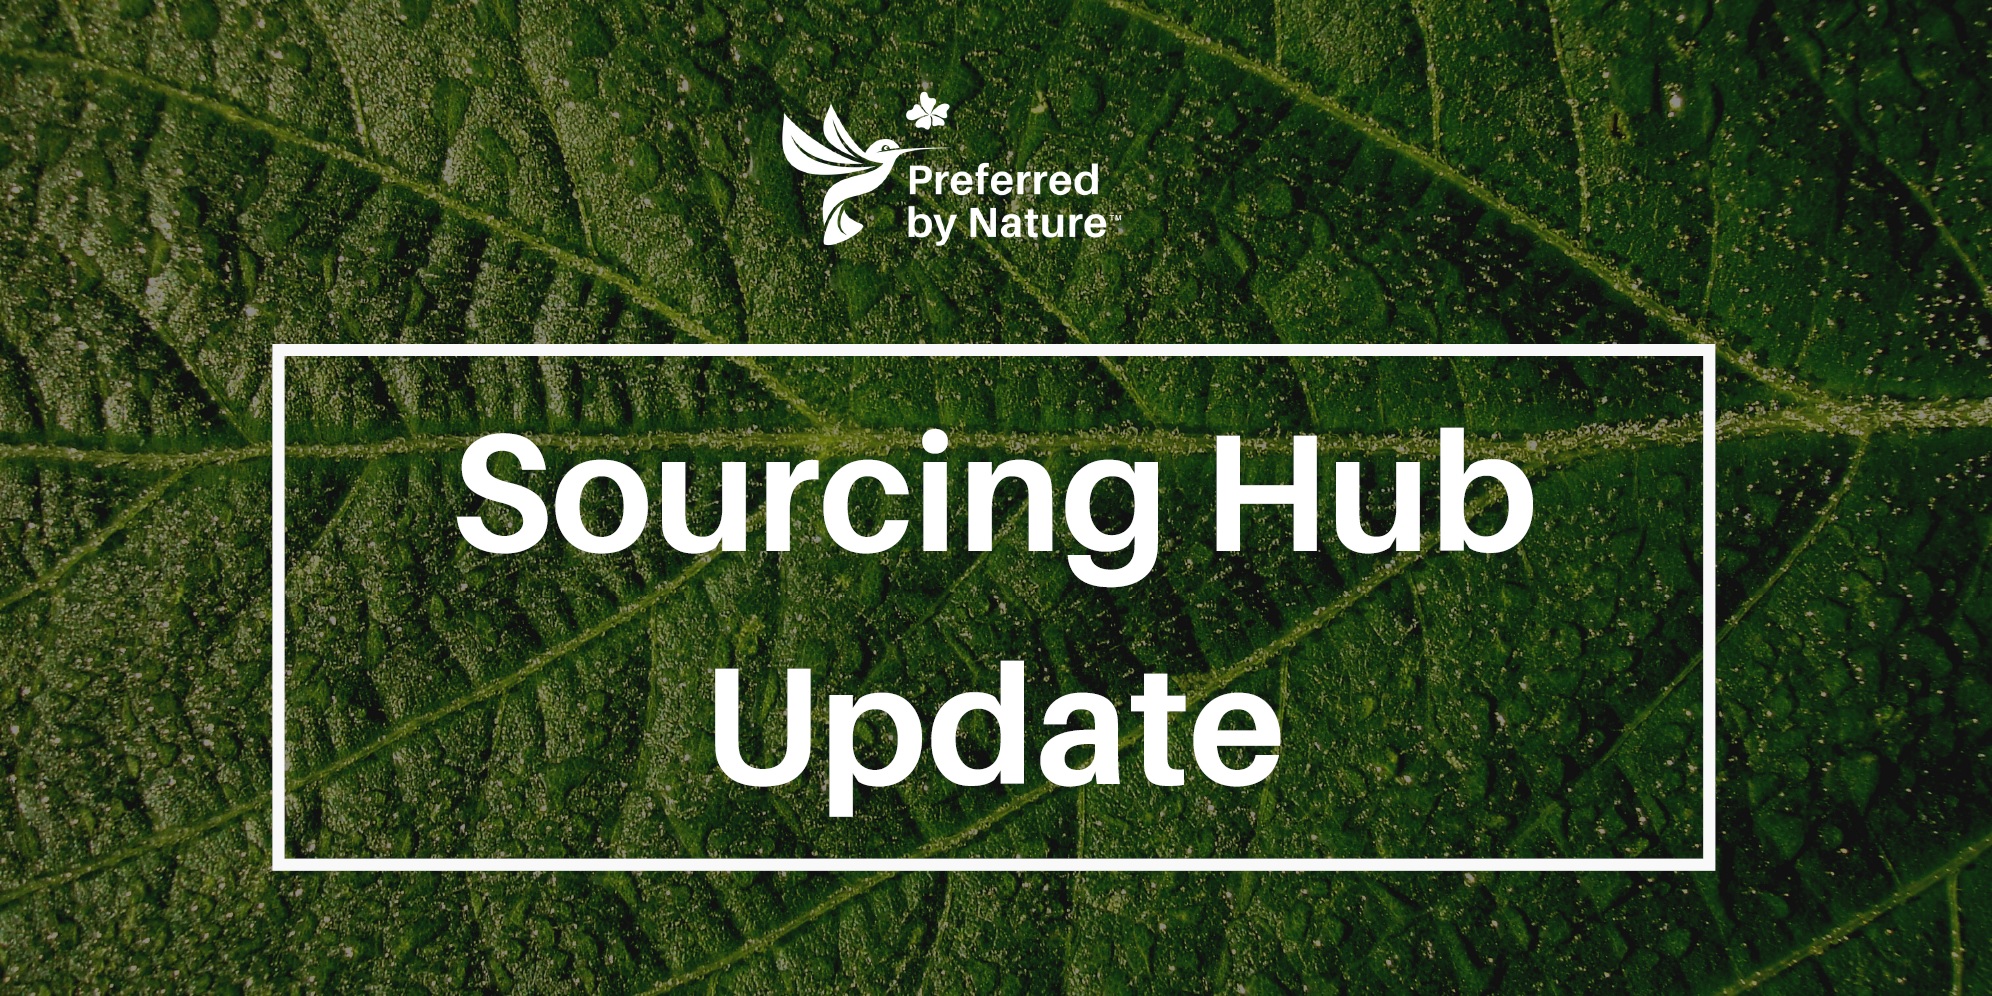 Sourcing Hub Update